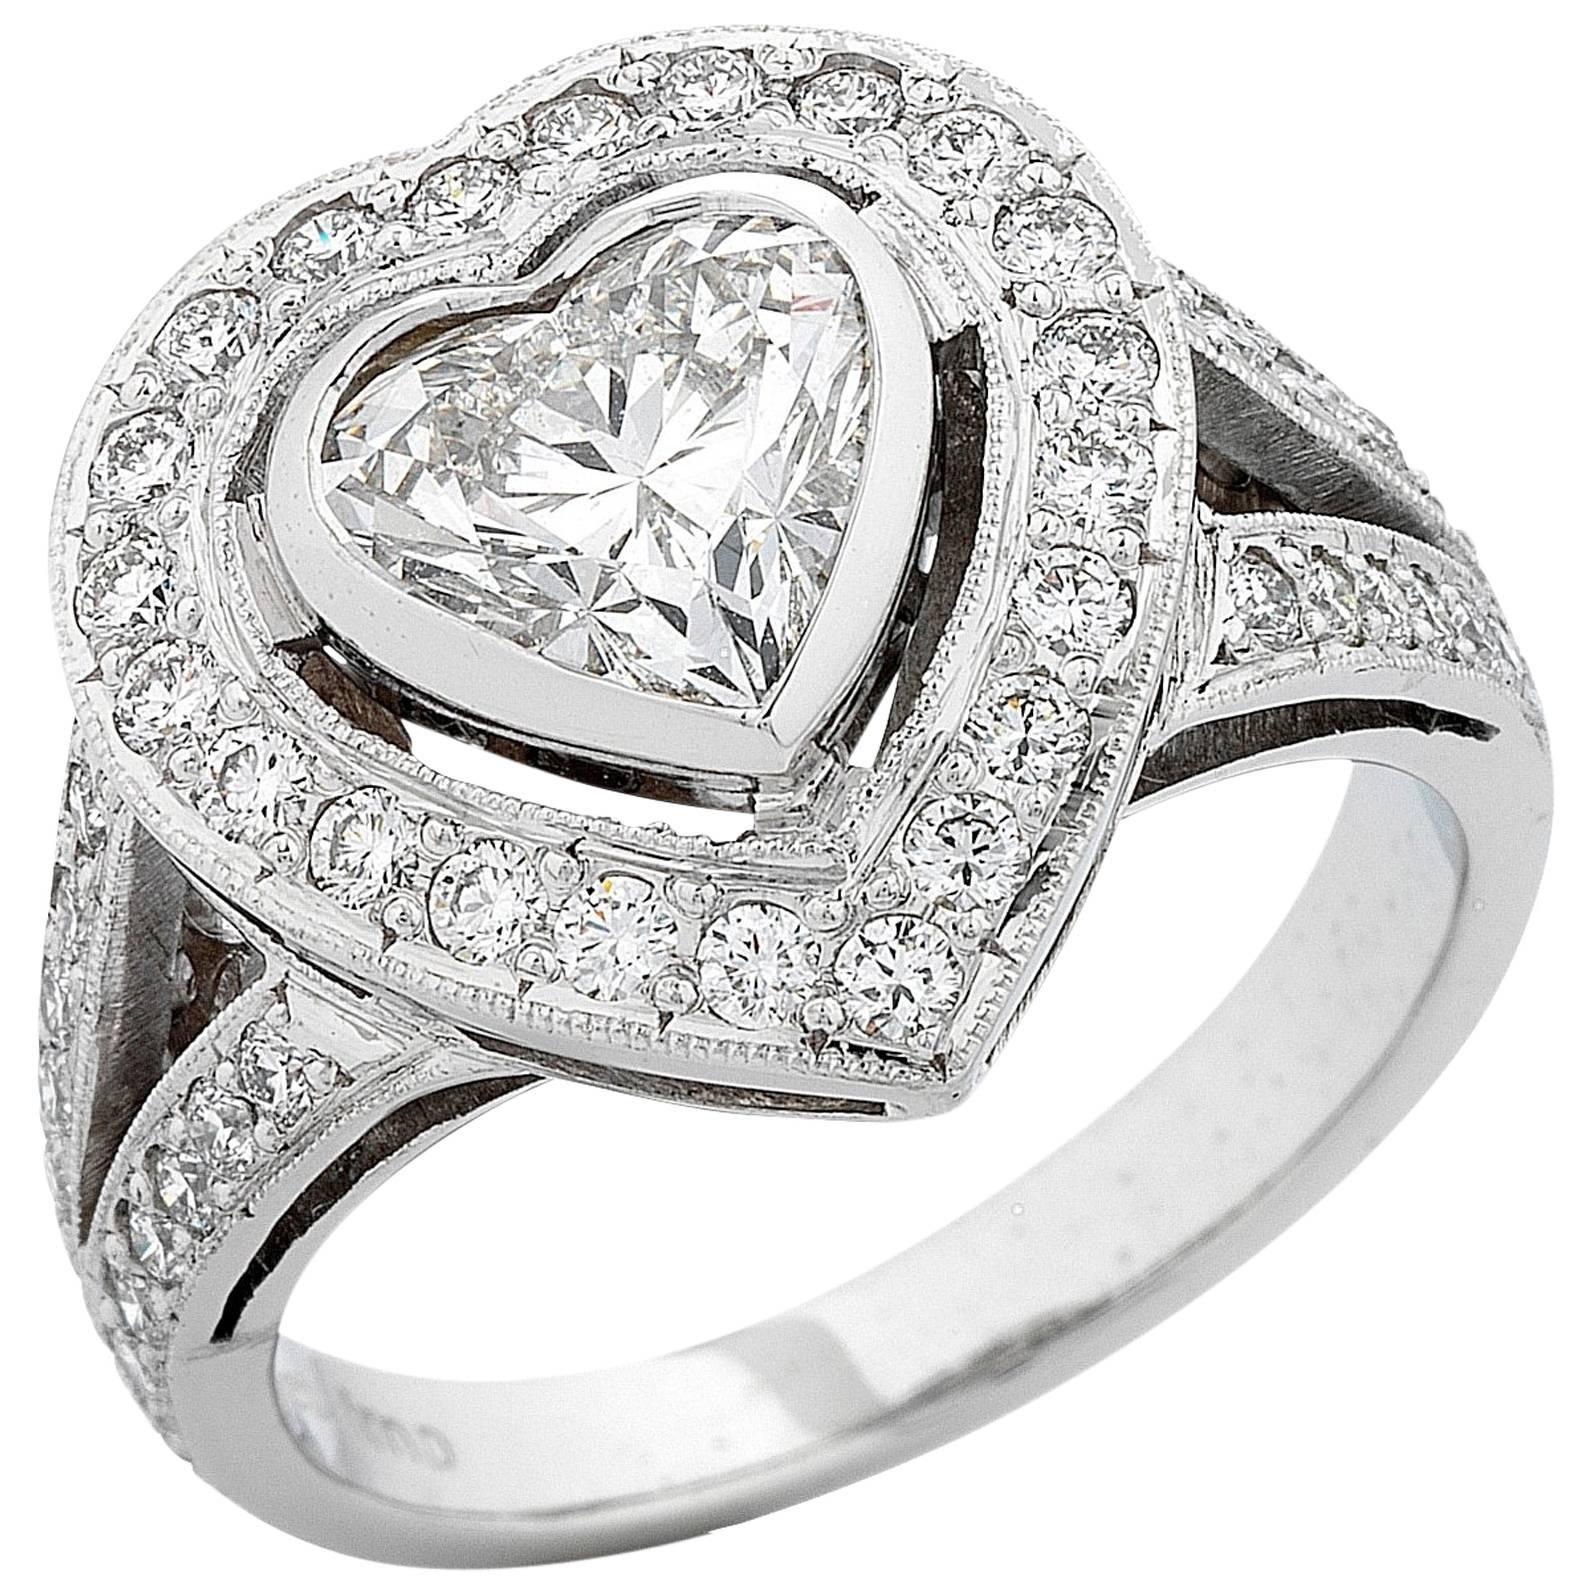 GIA Certified 1.41 Carat Heart Shaped Diamond Halo Ring